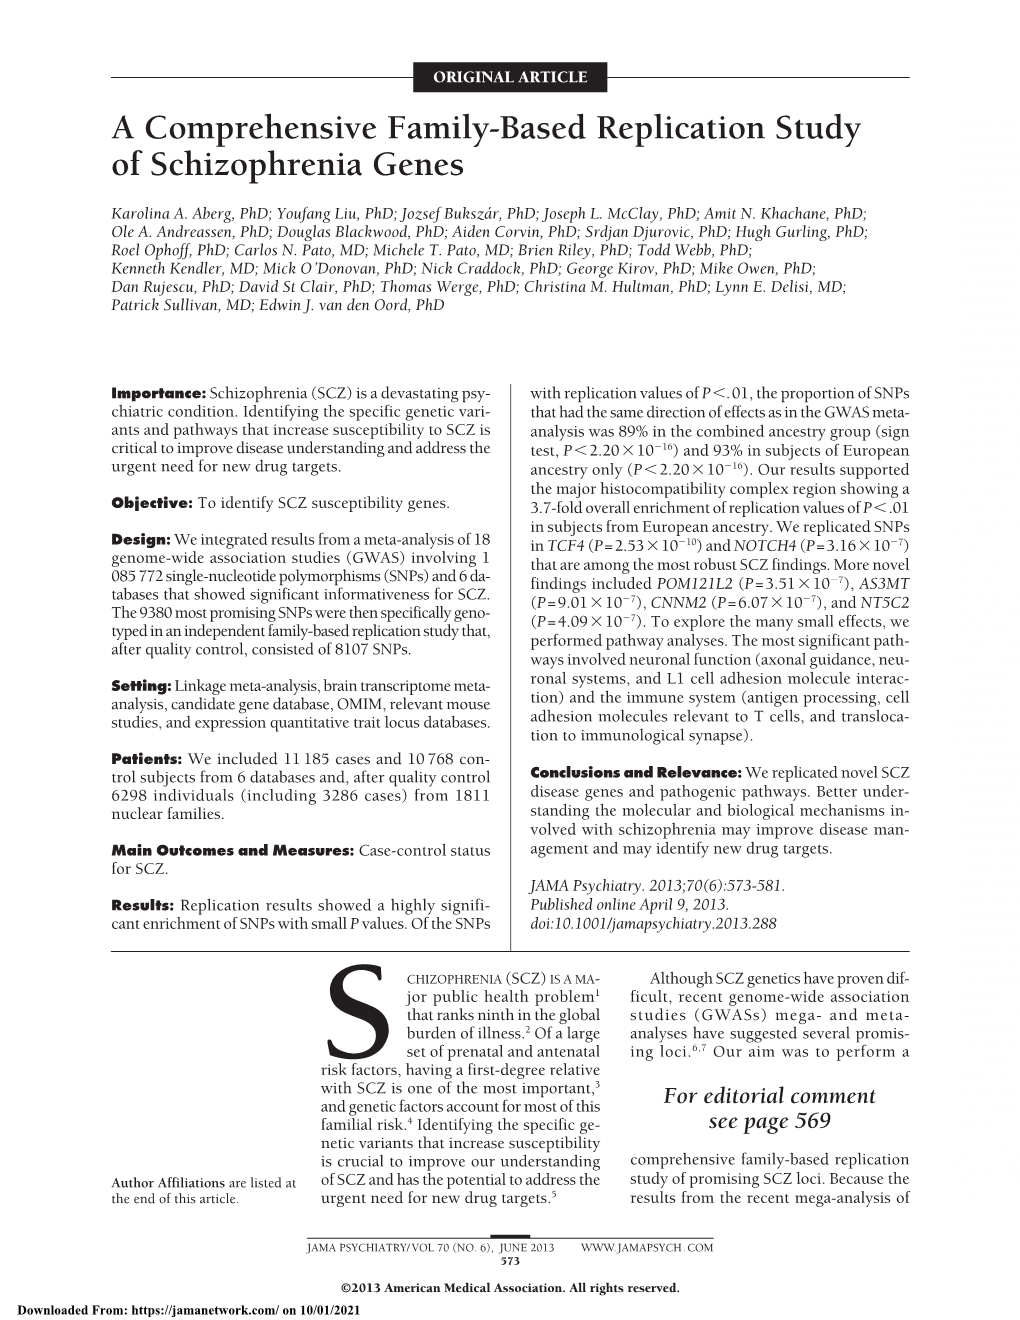 A Comprehensive Family-Based Replication Study Biomarker R Personalize of Schizophrenia Genes Aberg, Buks Khachane, a and Virginia Karolina A